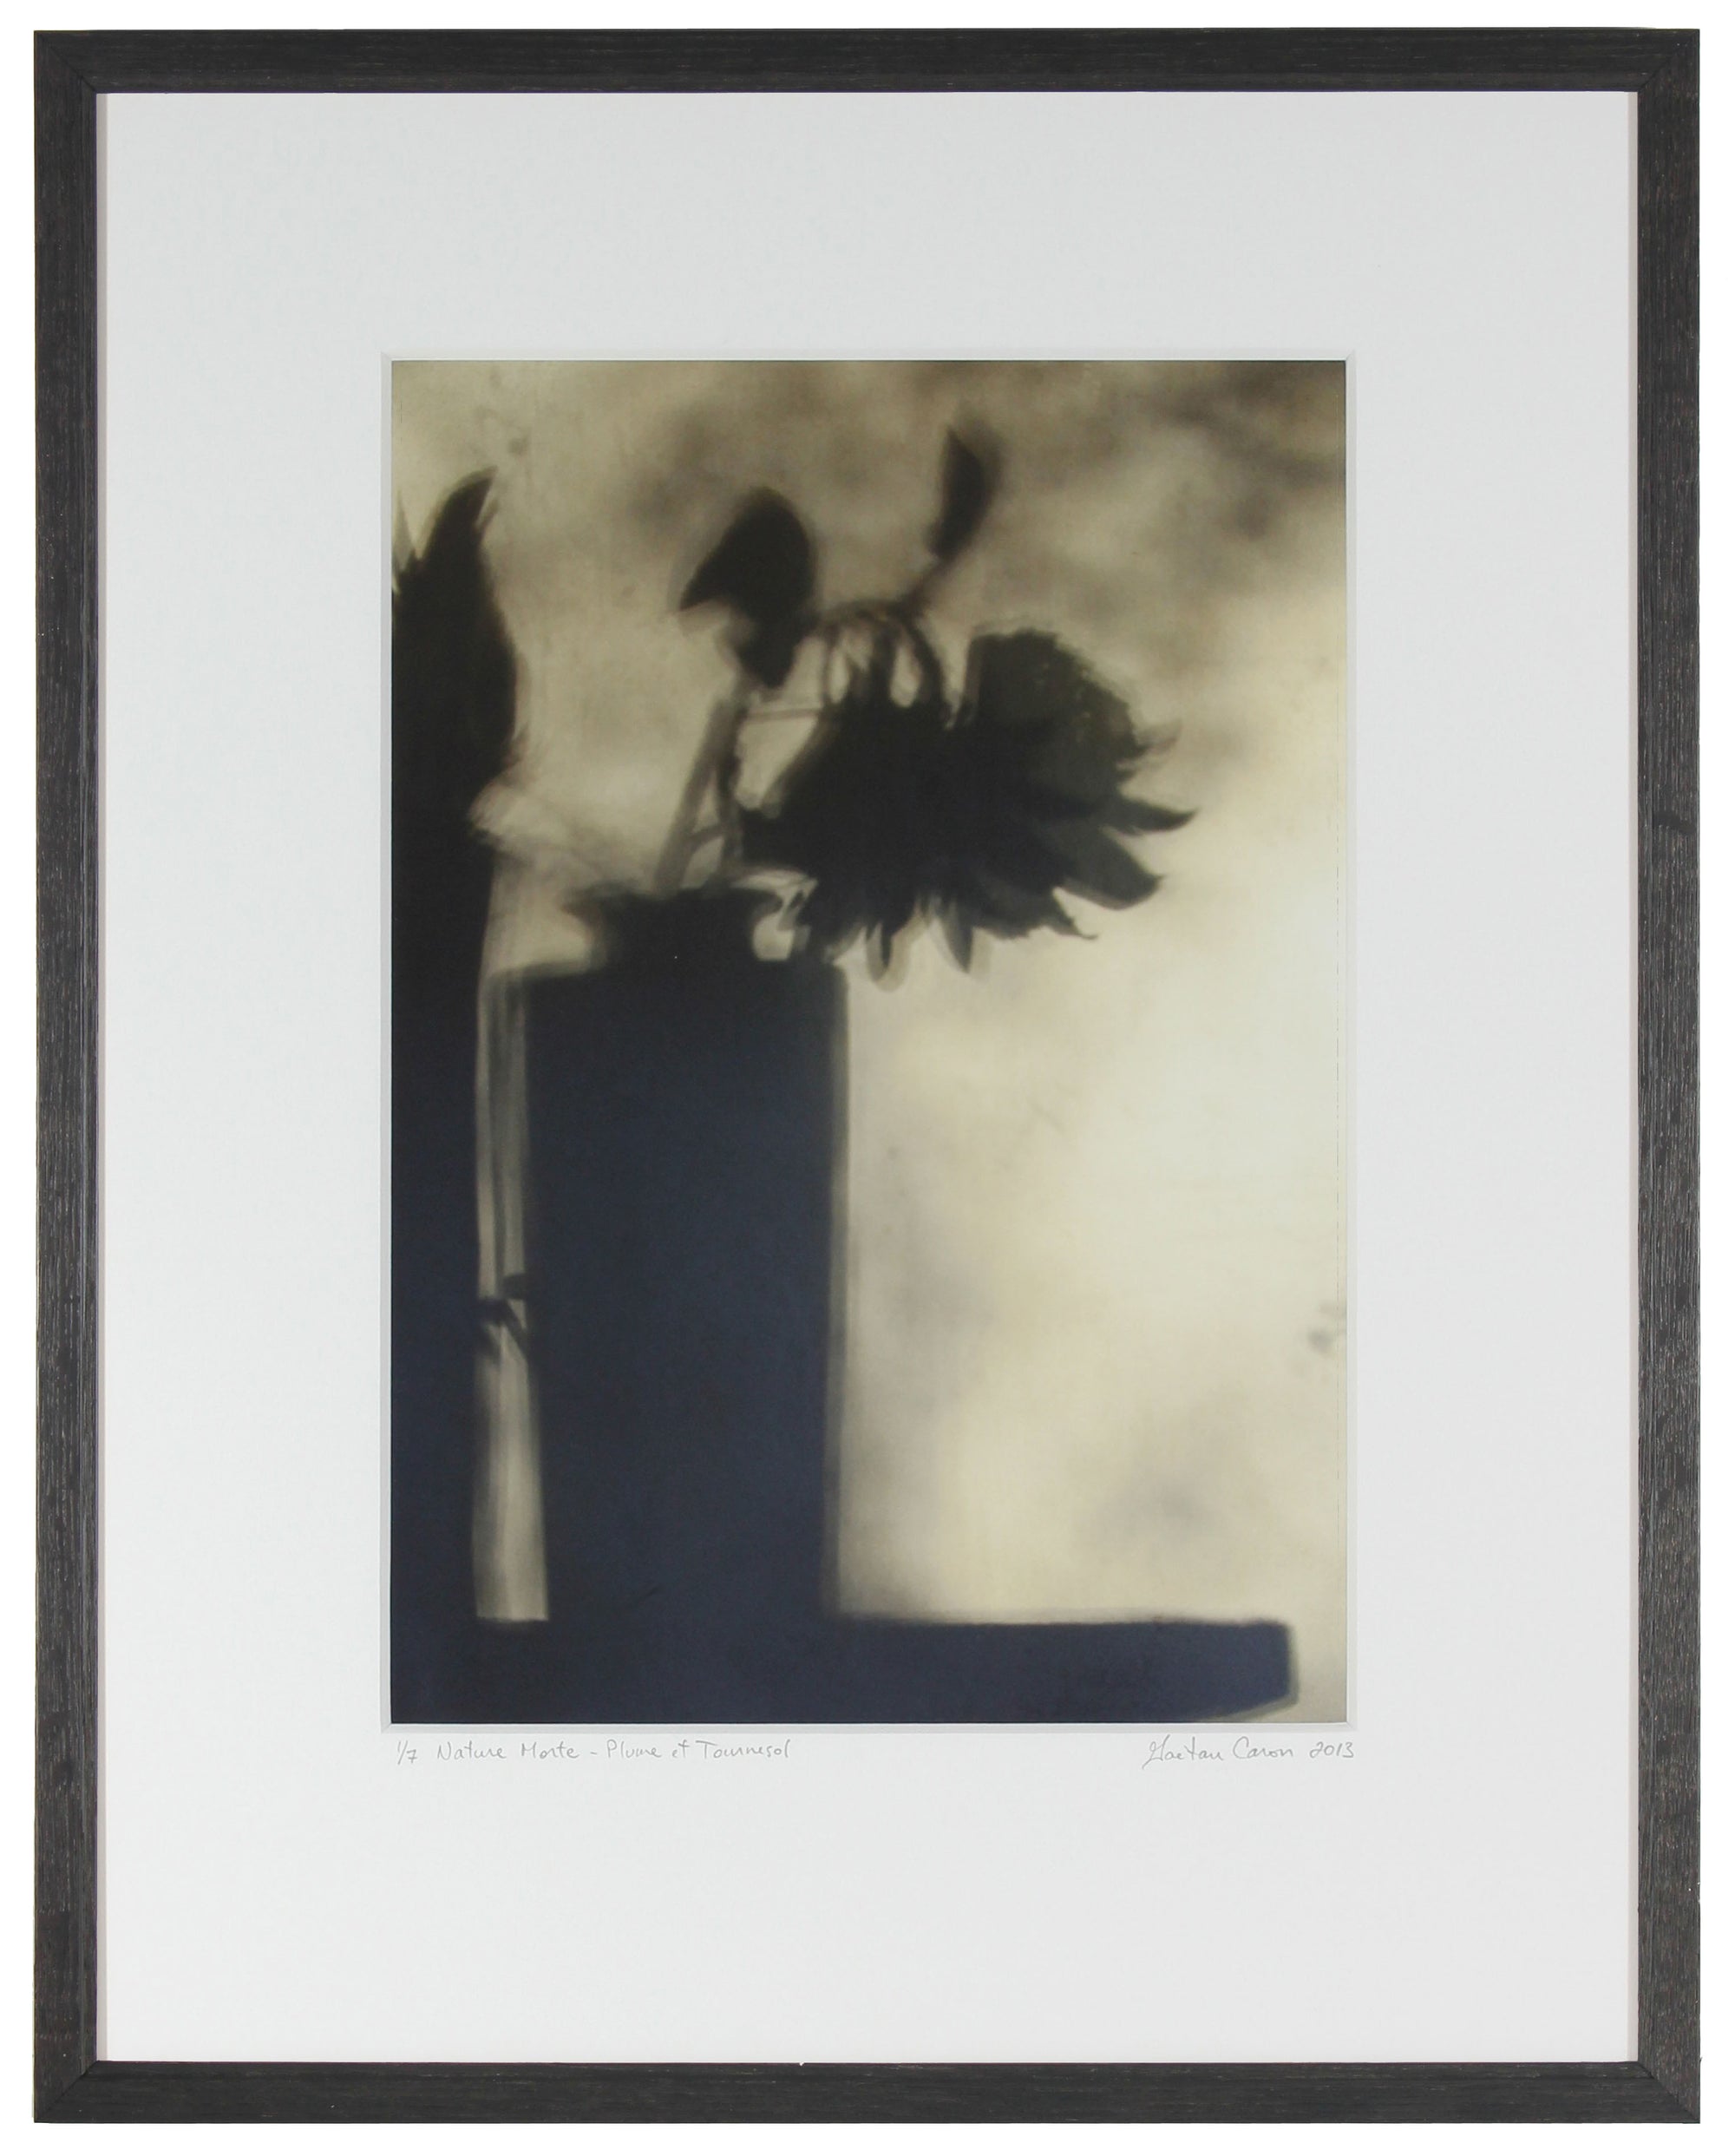 <I>Still Life with Feather & Sunflower (Nature morte avec plume et tournesol)</I><br>Mendocino, California, 2013<br><br>GC0351